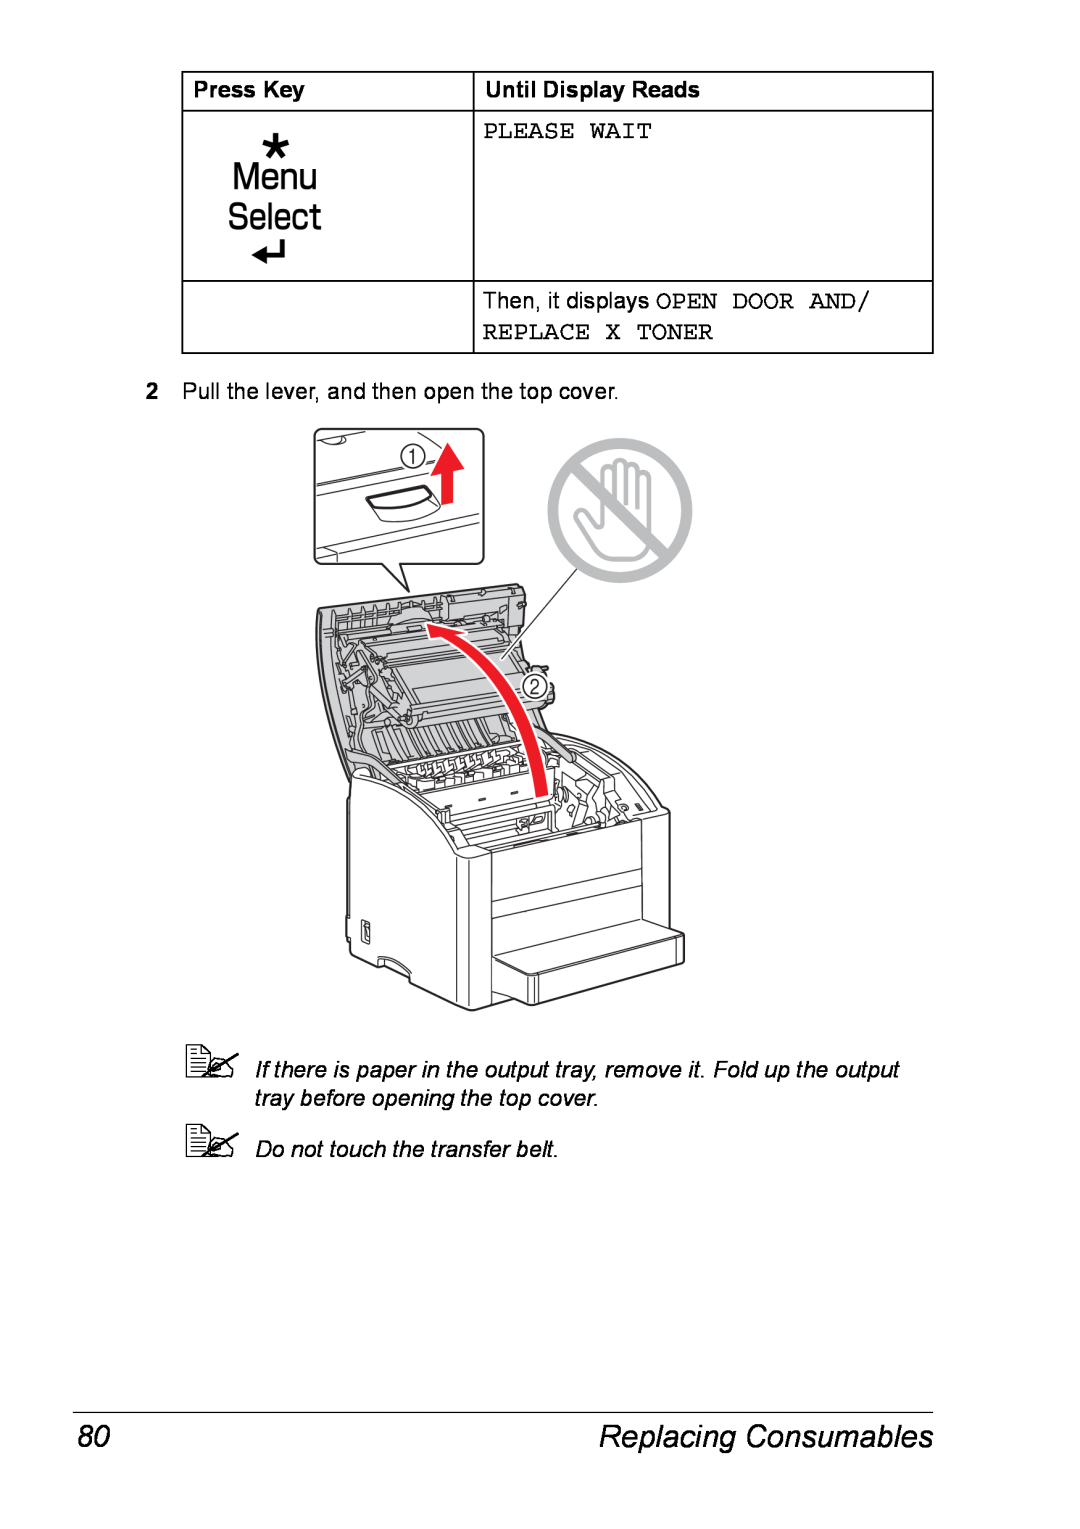 Xerox 6120 manual Replacing Consumables, Please Wait, Replace X Toner, Then, it displays OPEN DOOR AND 